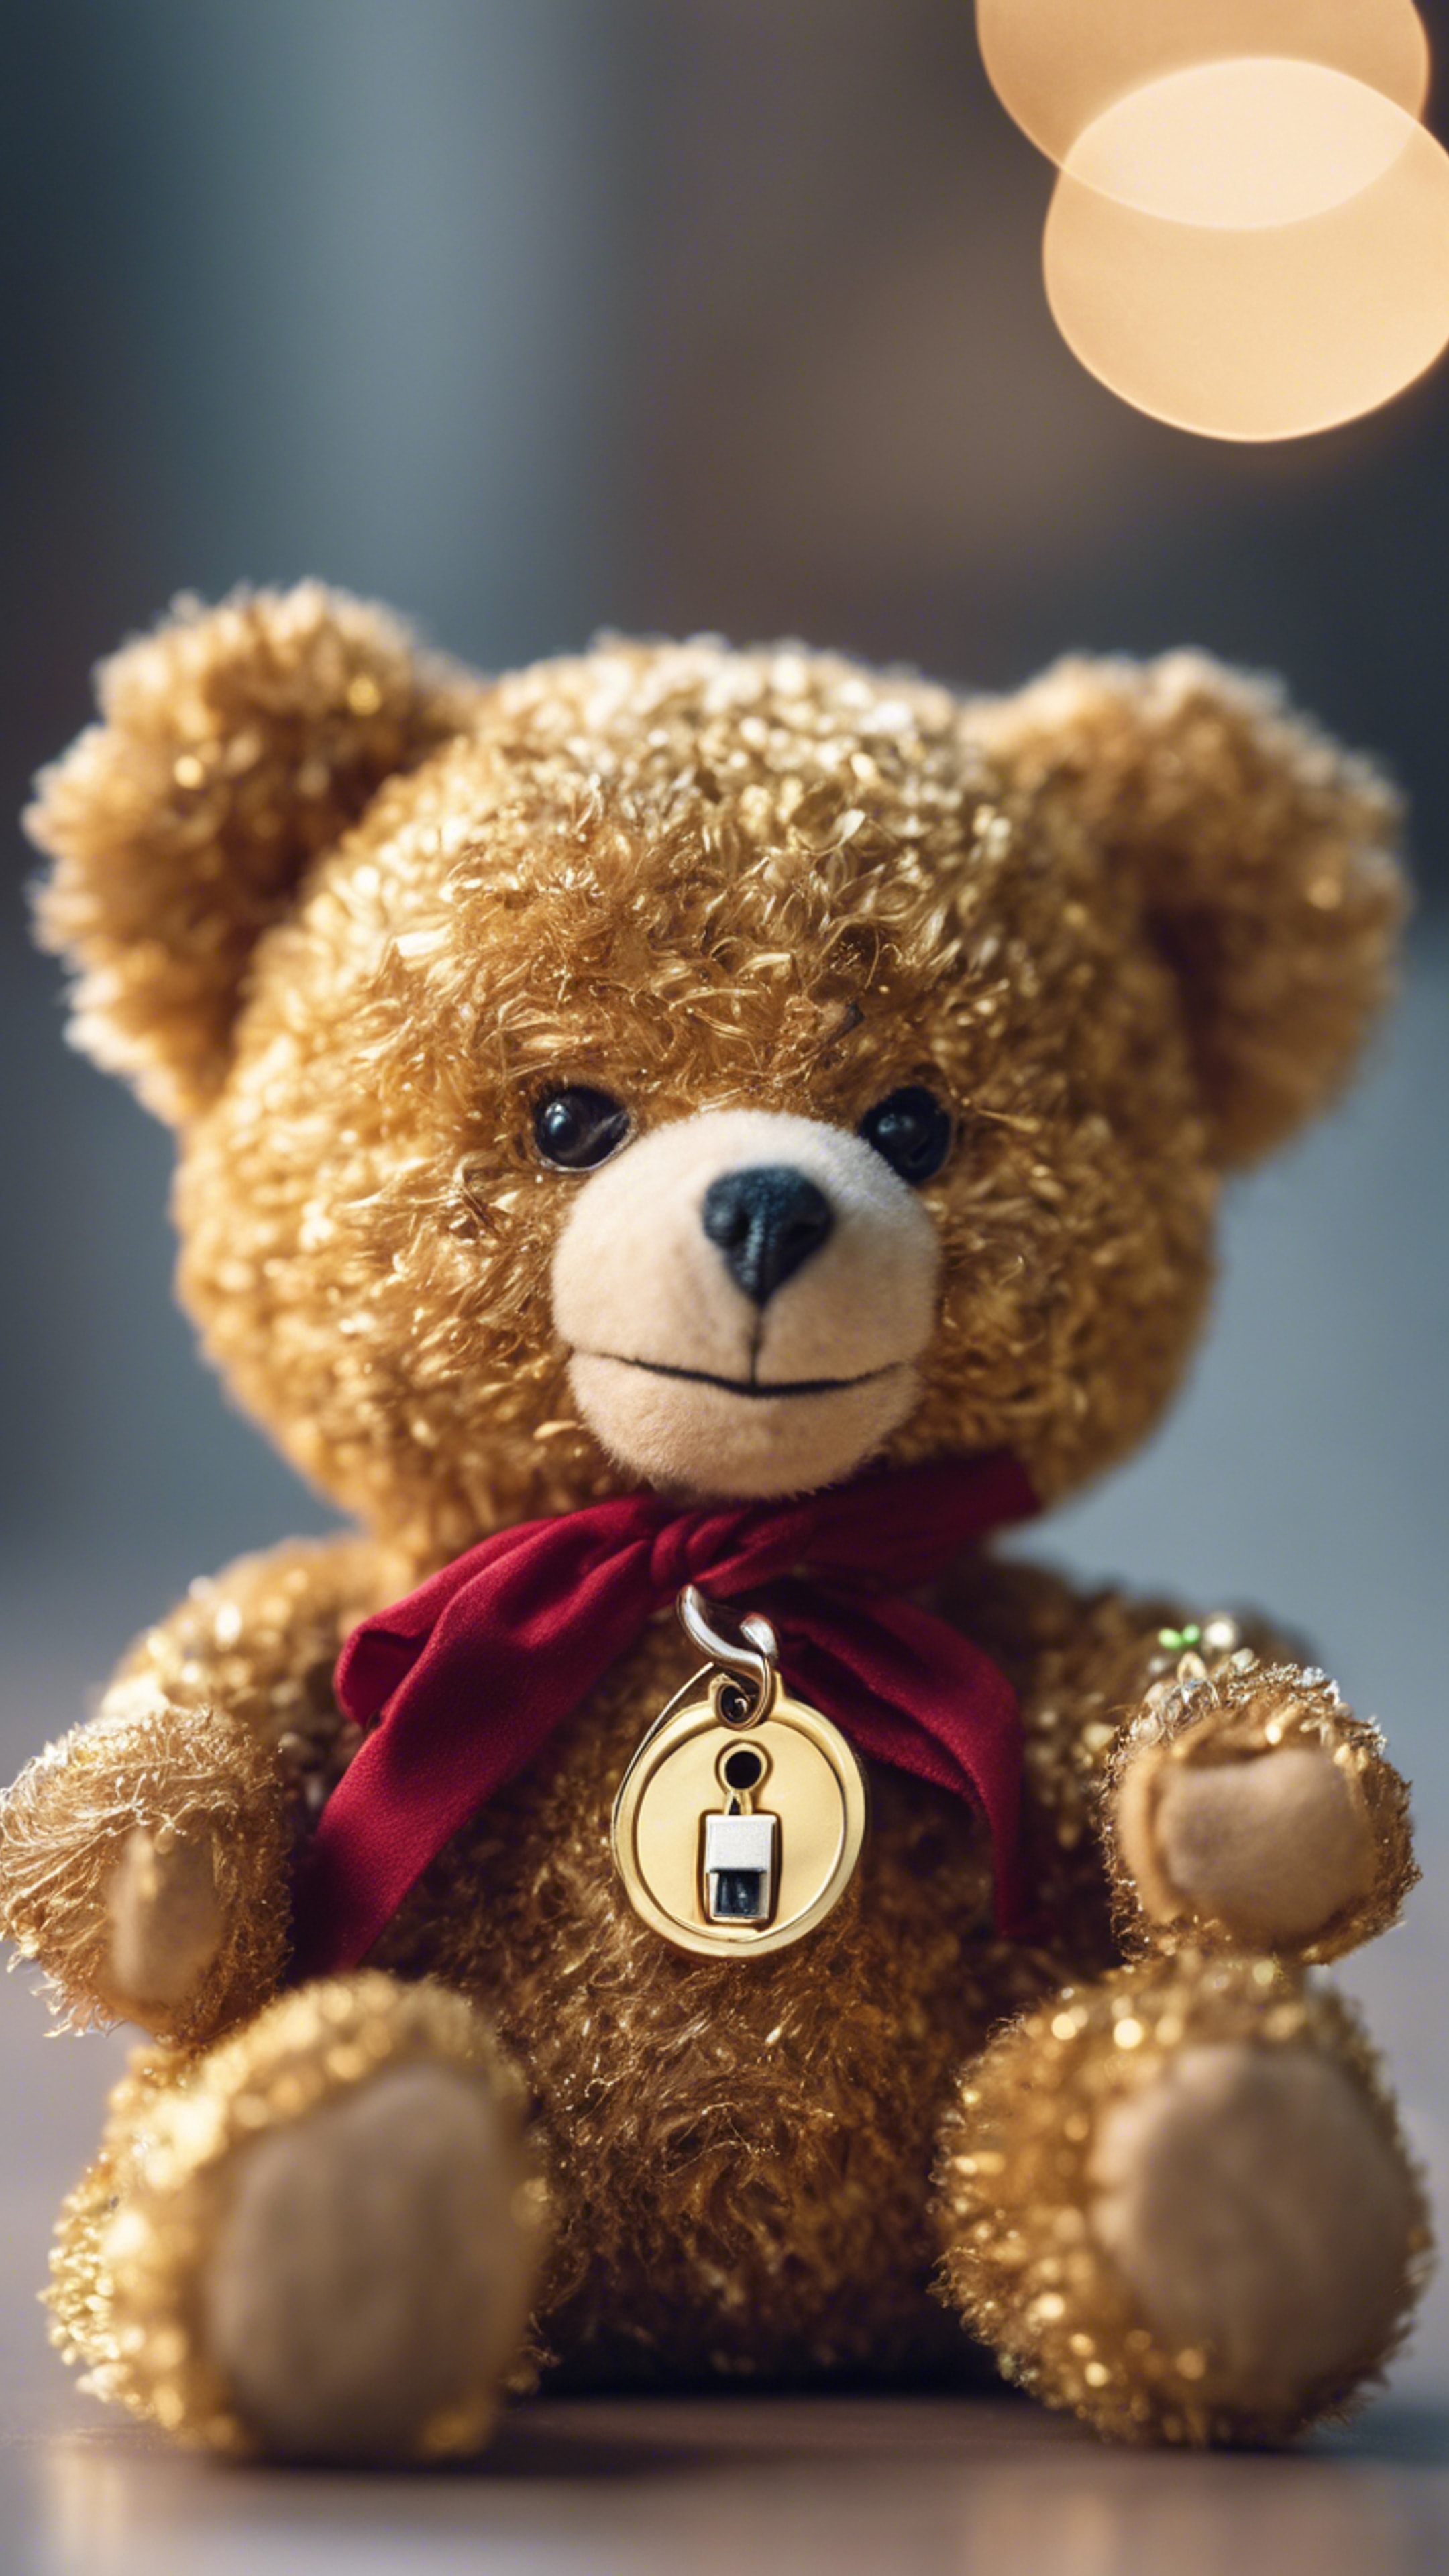 A teddy bear holding a shiny golden key. Wallpaper[5d2fb50236af4c678fb0]